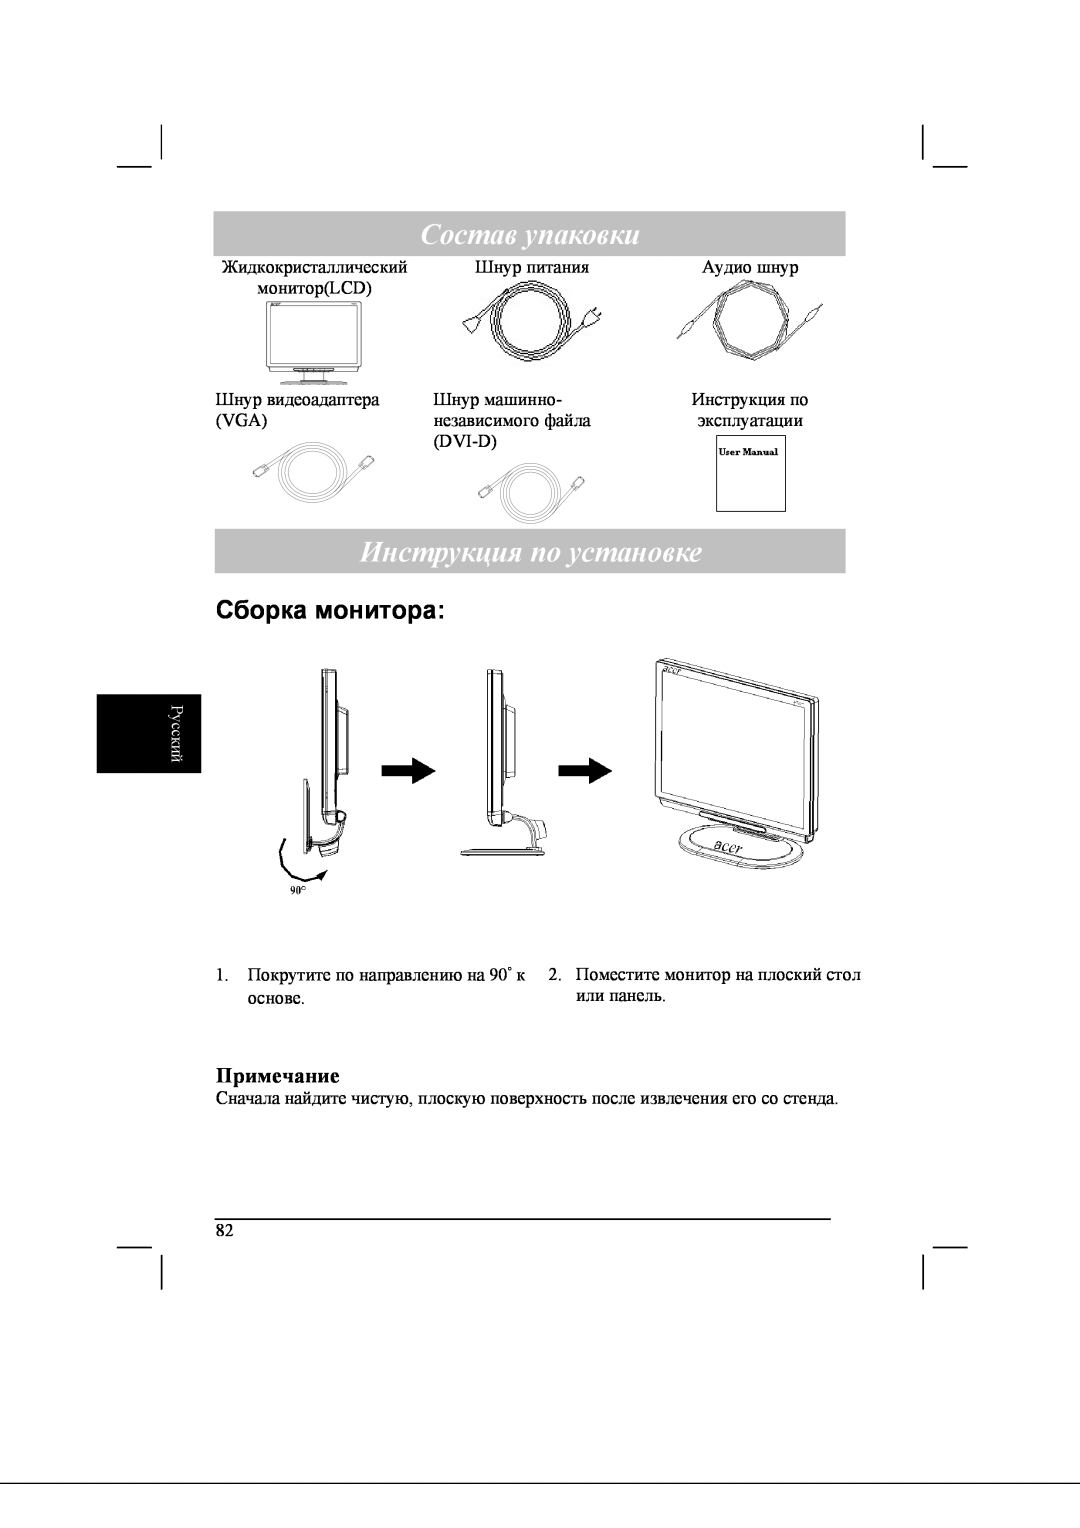 Acer AL2021 manual Состав упаковки, Инструкция по установке, Сборка монитора, Примечание 